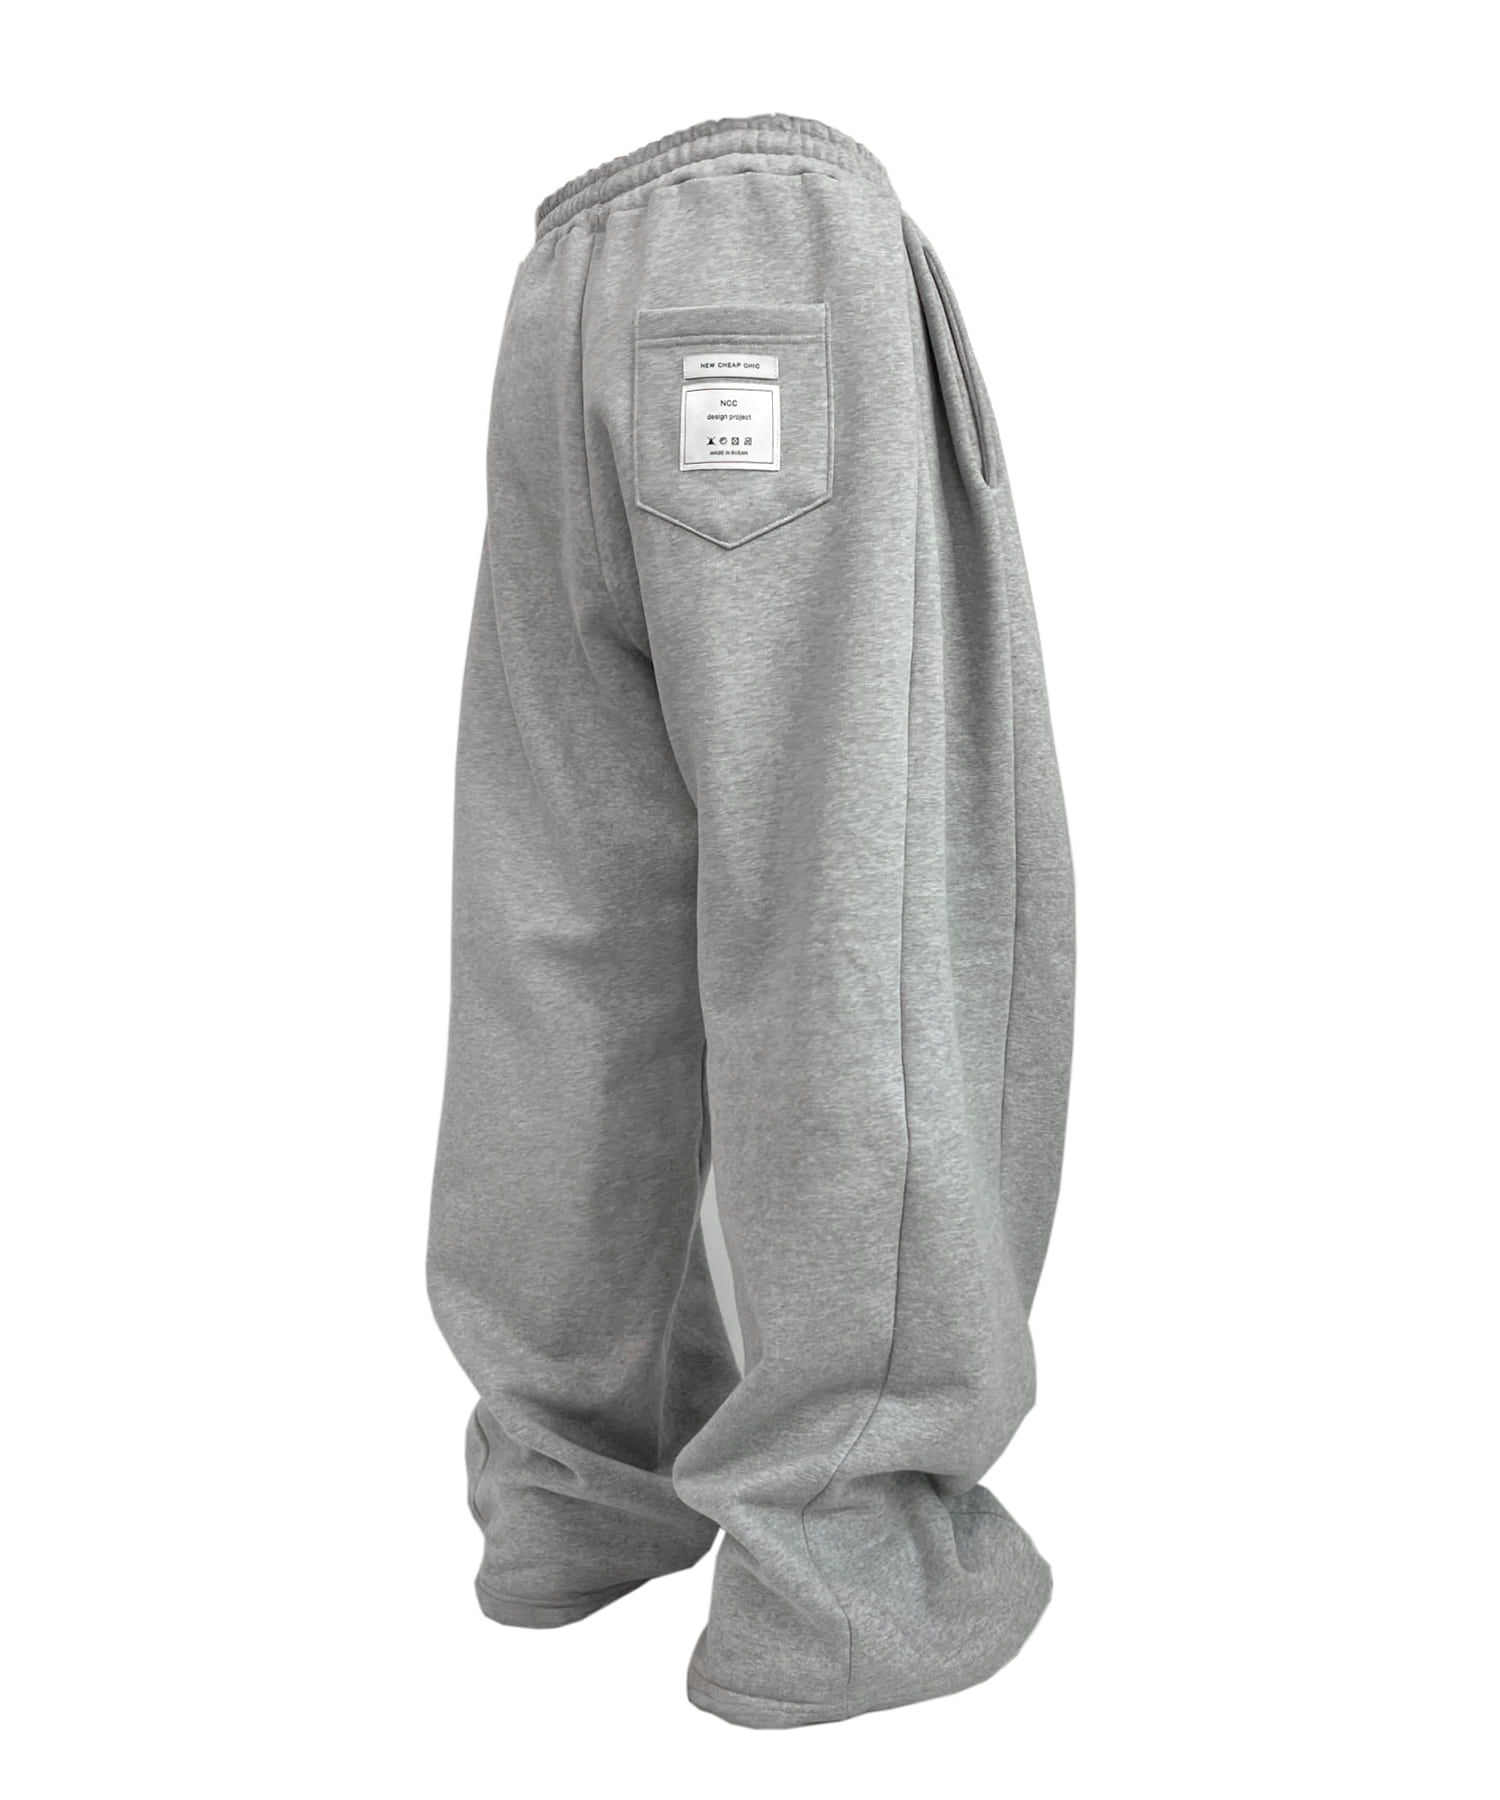 DP-030 (3 panel sweat pants grey)